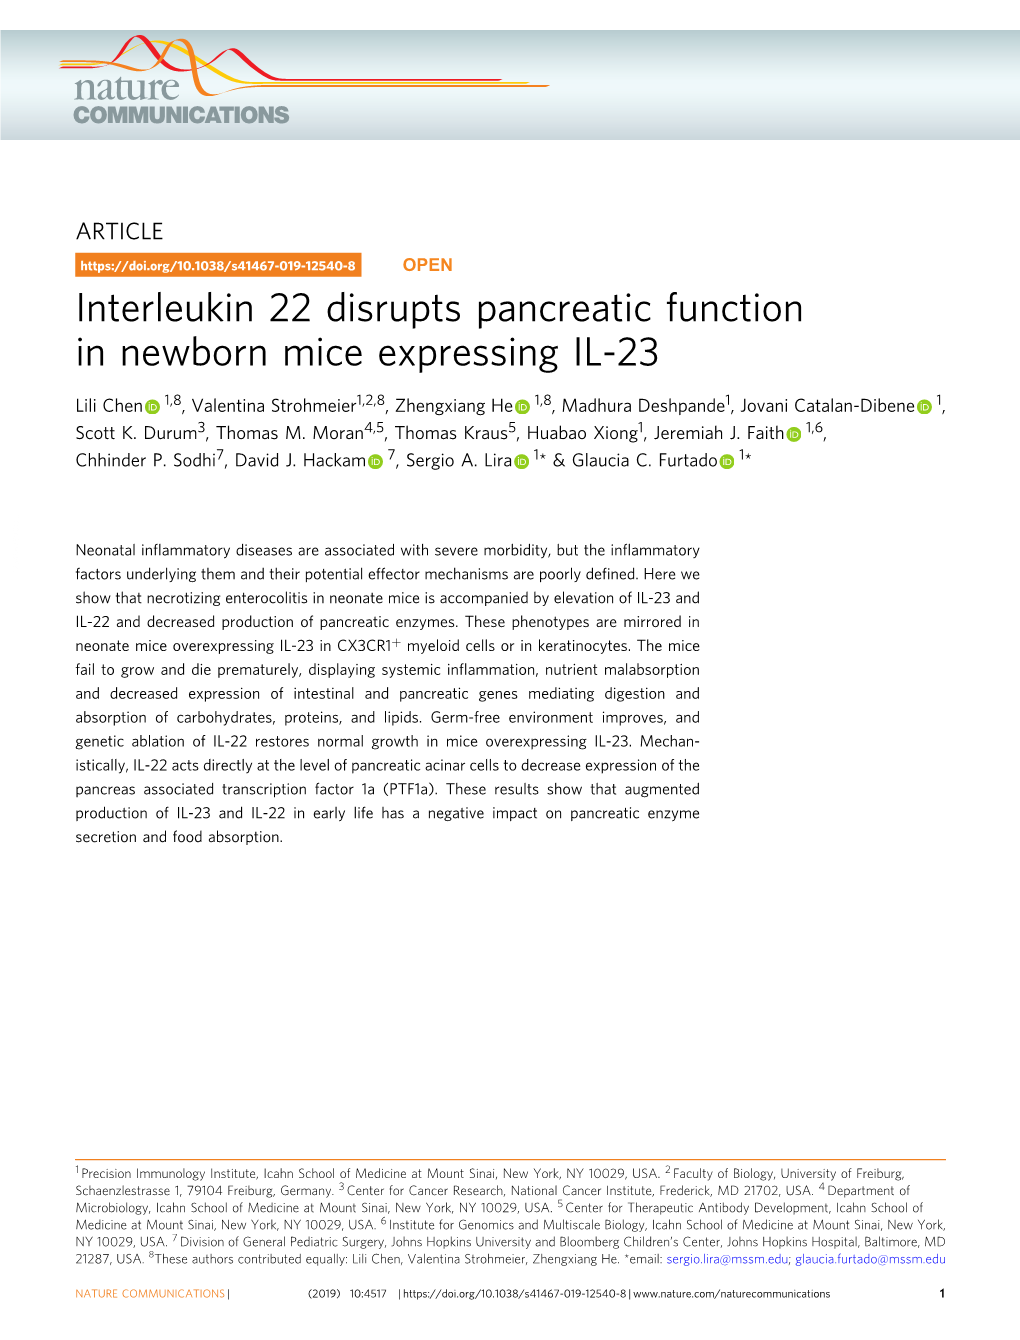 Interleukin 22 Disrupts Pancreatic Function in Newborn Mice Expressing IL-23